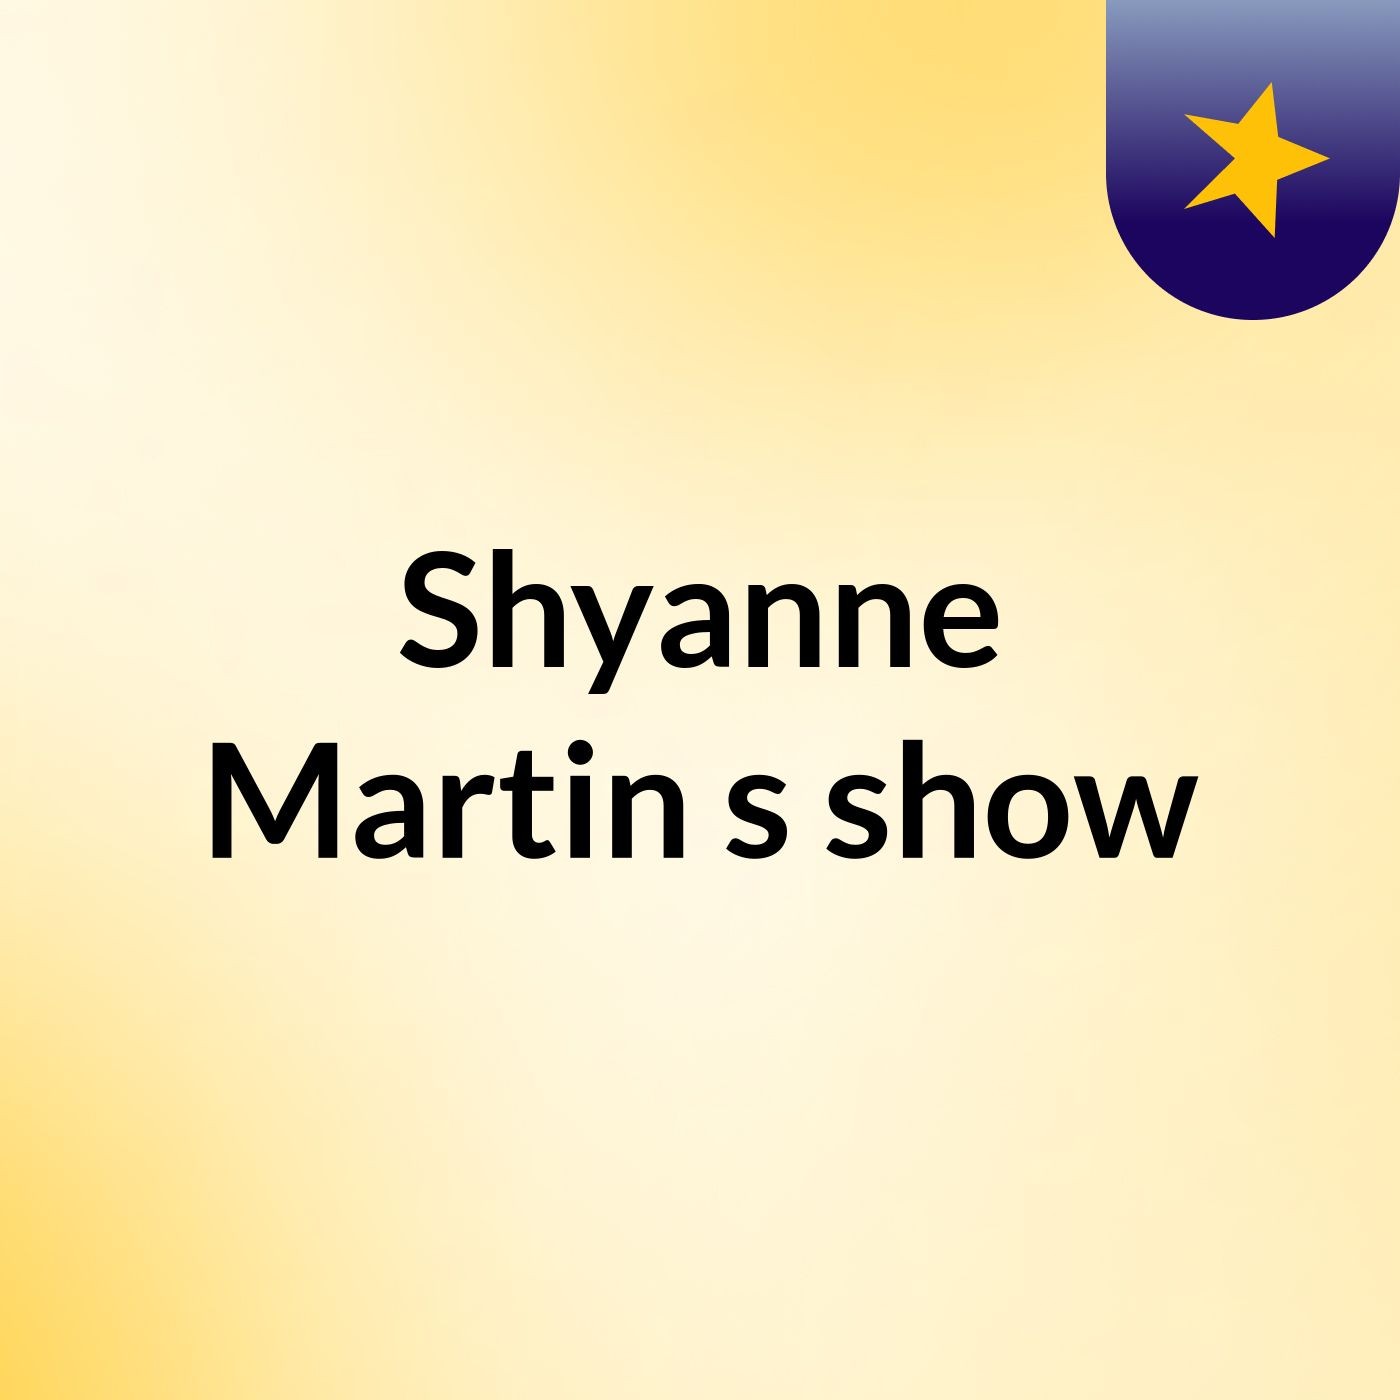 Shyanne Martin's show